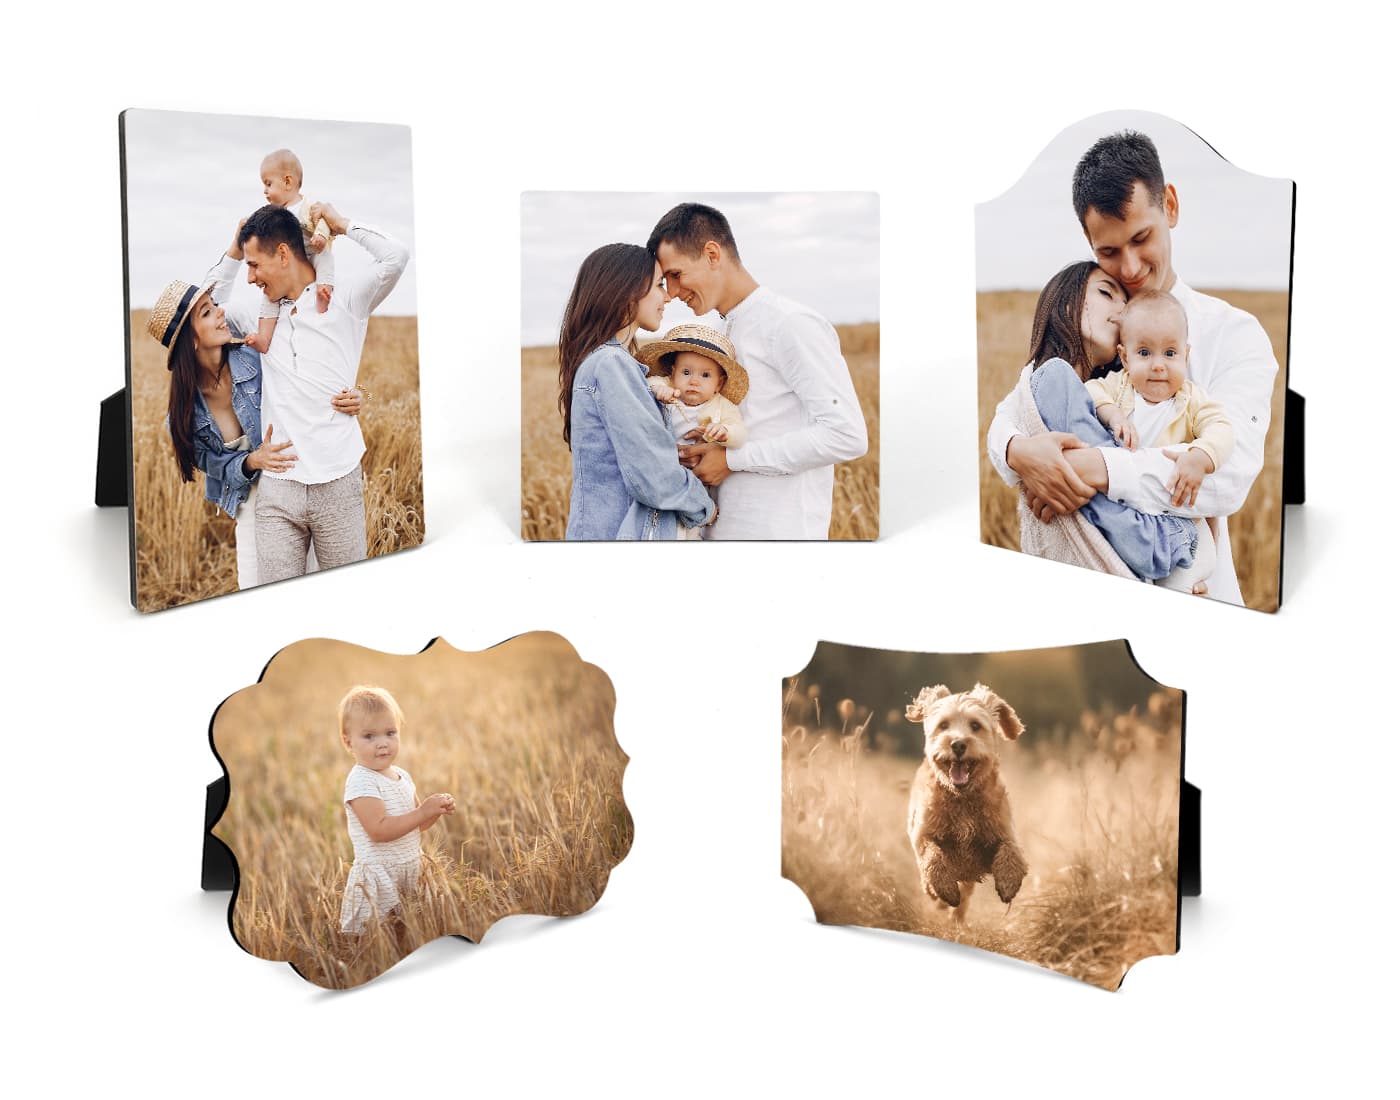 Personalized Photo Panels - Mounted Photo Panel Types